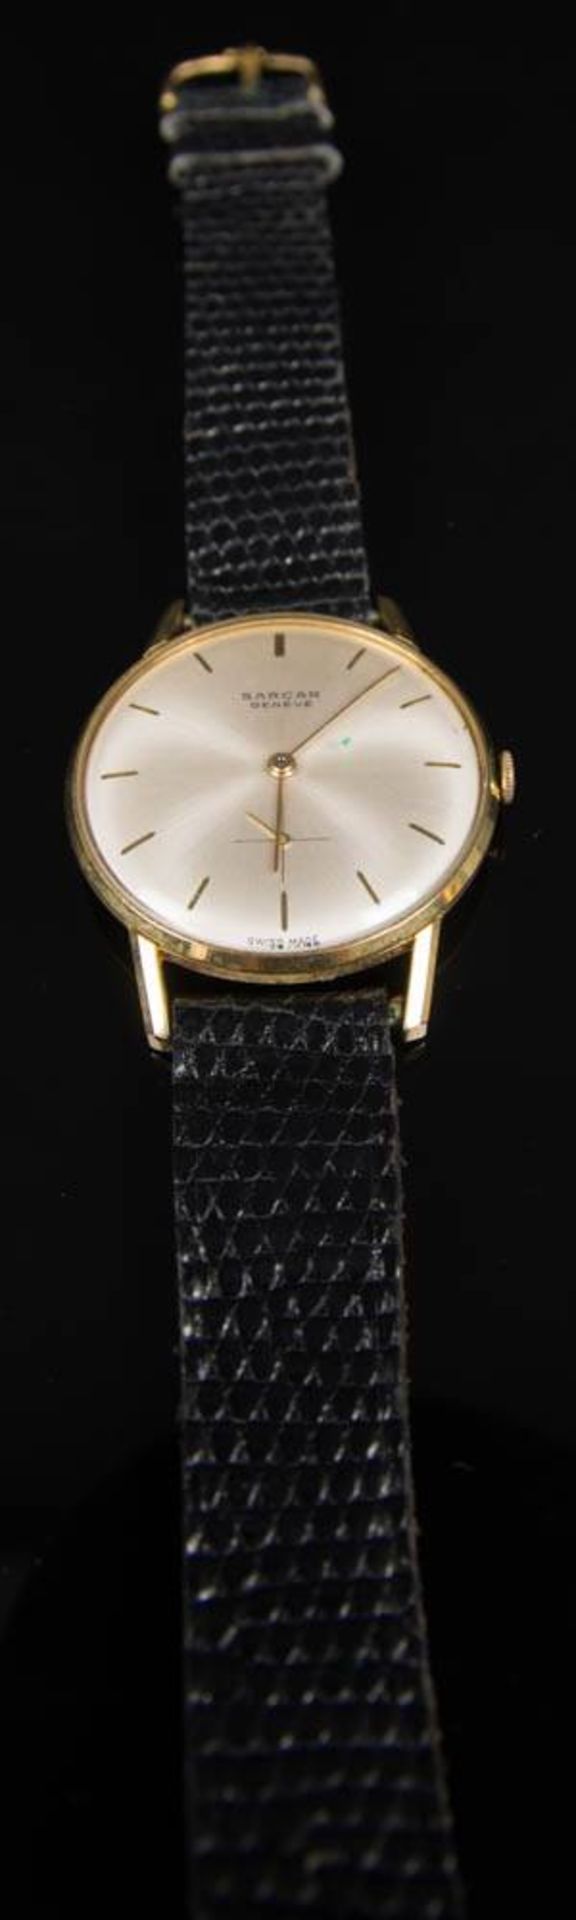 Sarcar-Geneve Armbanduhr, 1960er. - Bild 2 aus 5